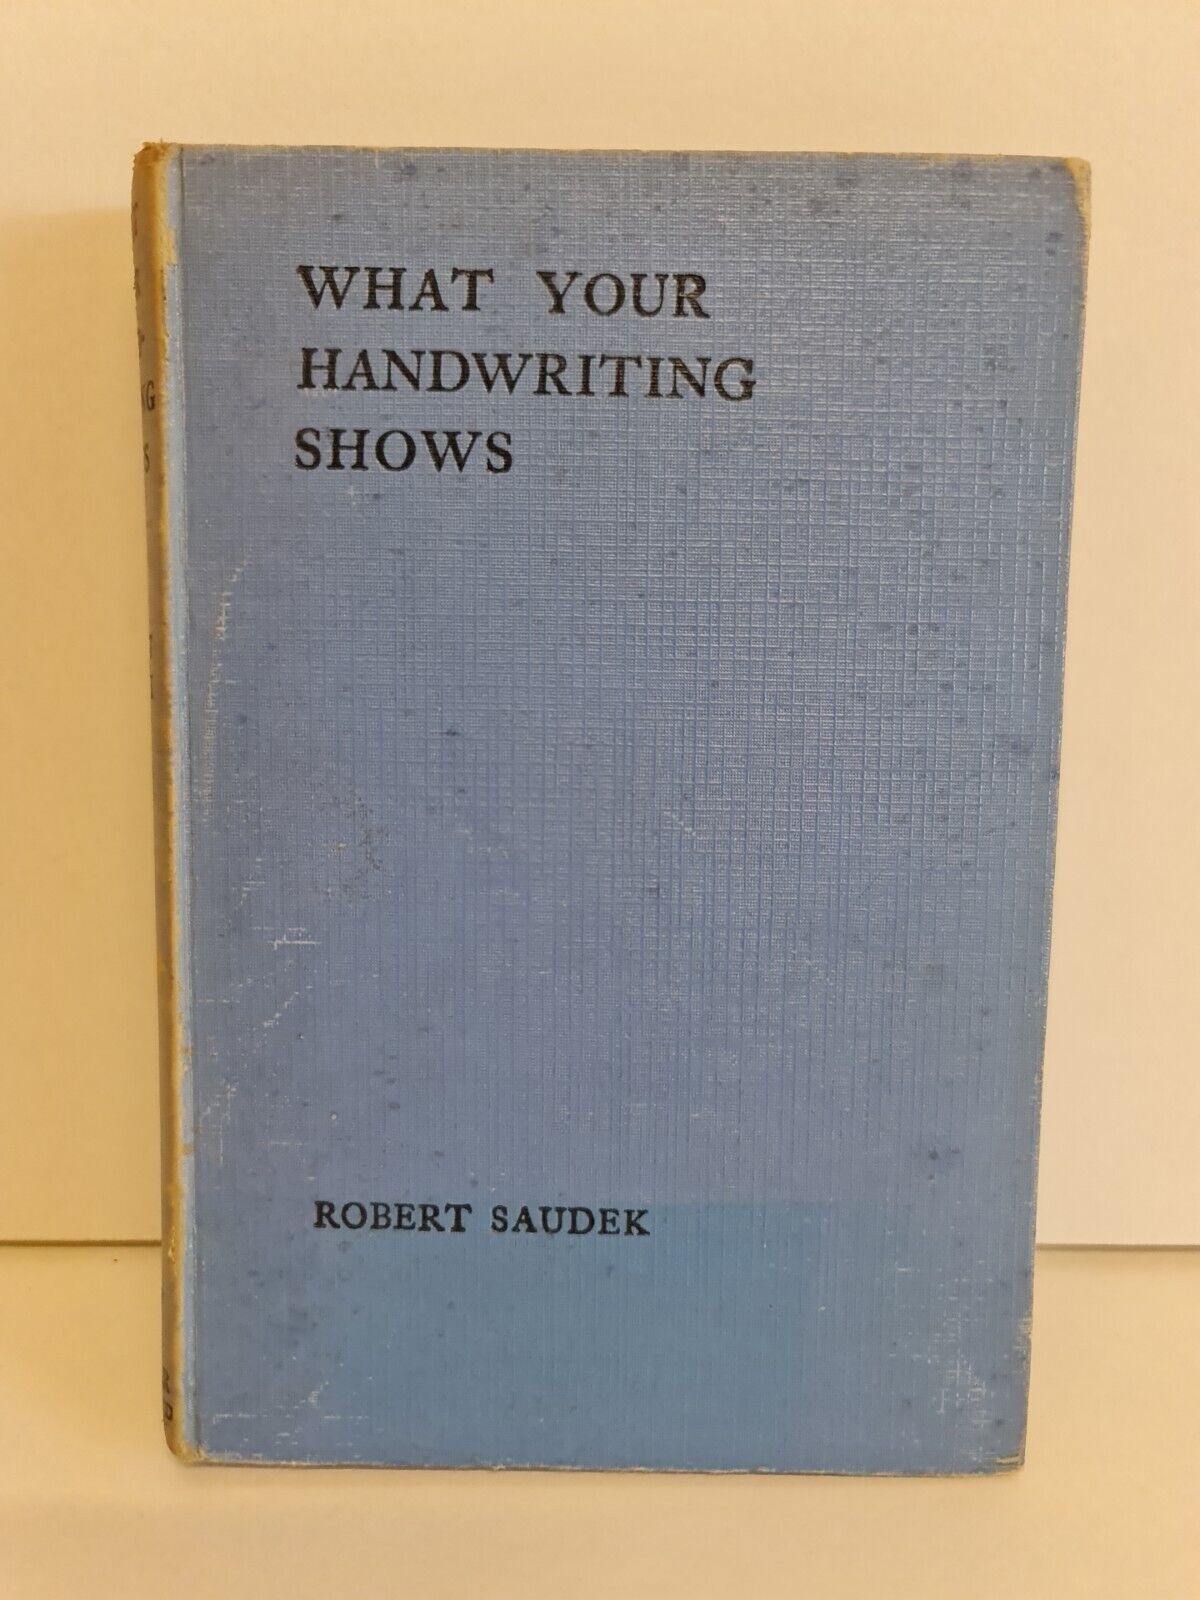 What Your Handwriting Shows by Robert Saudek (1932)